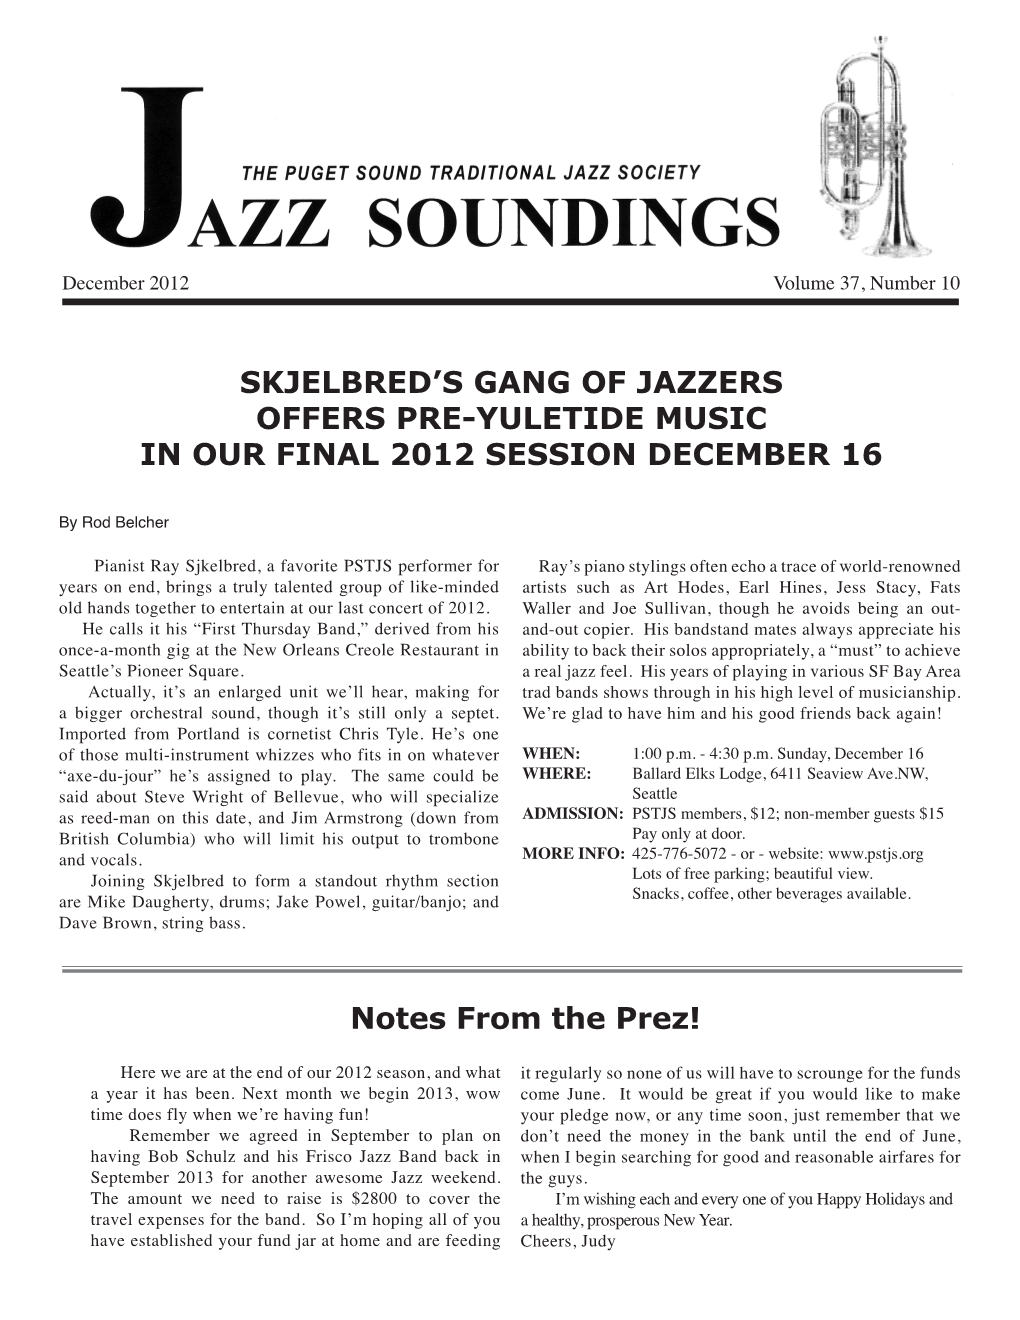 Skjelbred's Gang of Jazzers Offers Pre-Yuletide Music